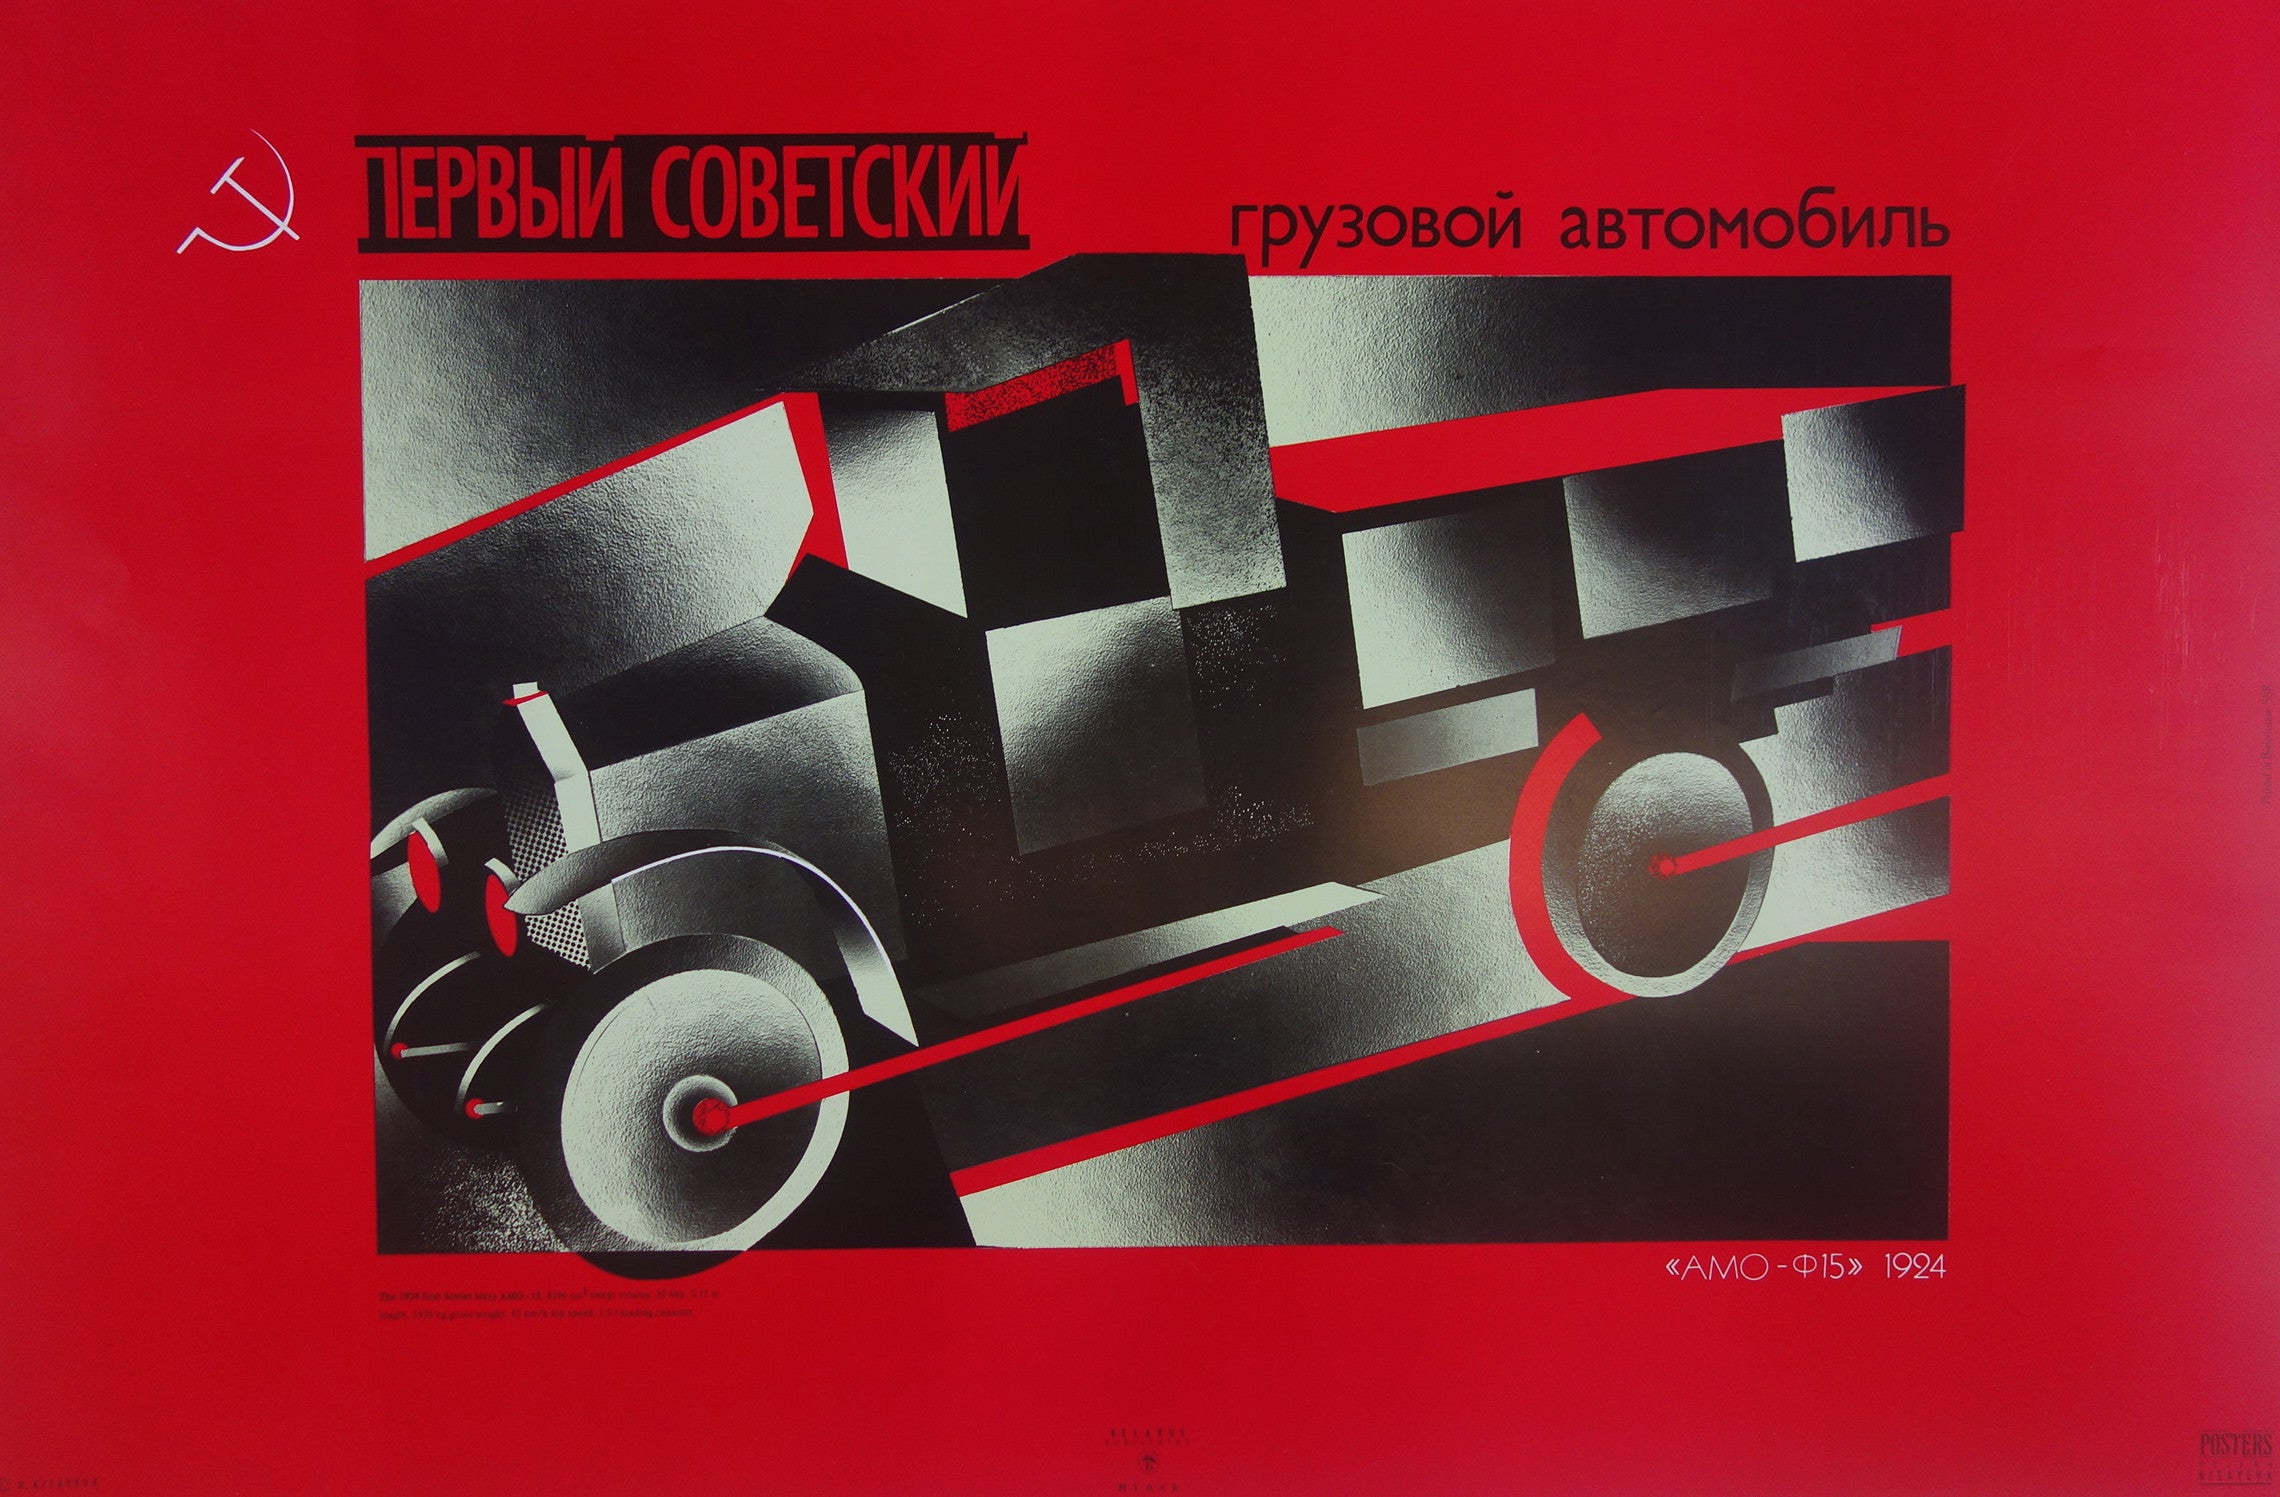 The 1924 First Soviet Truck